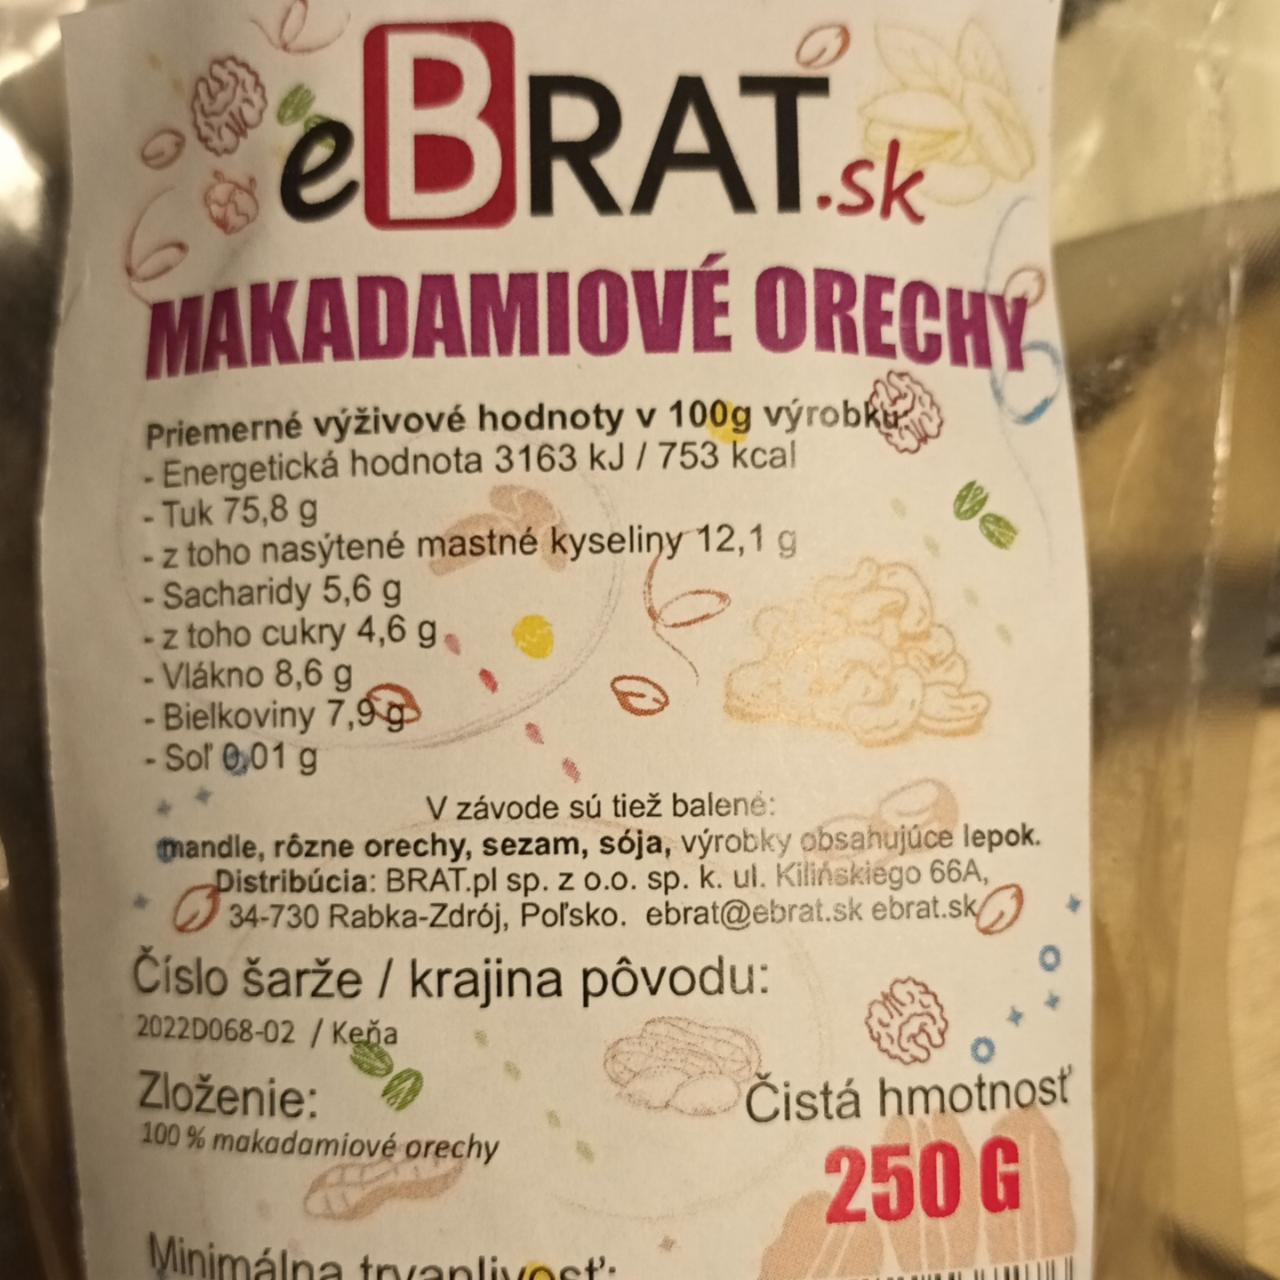 Fotografie - Makadamiové orechy eBrat.sk